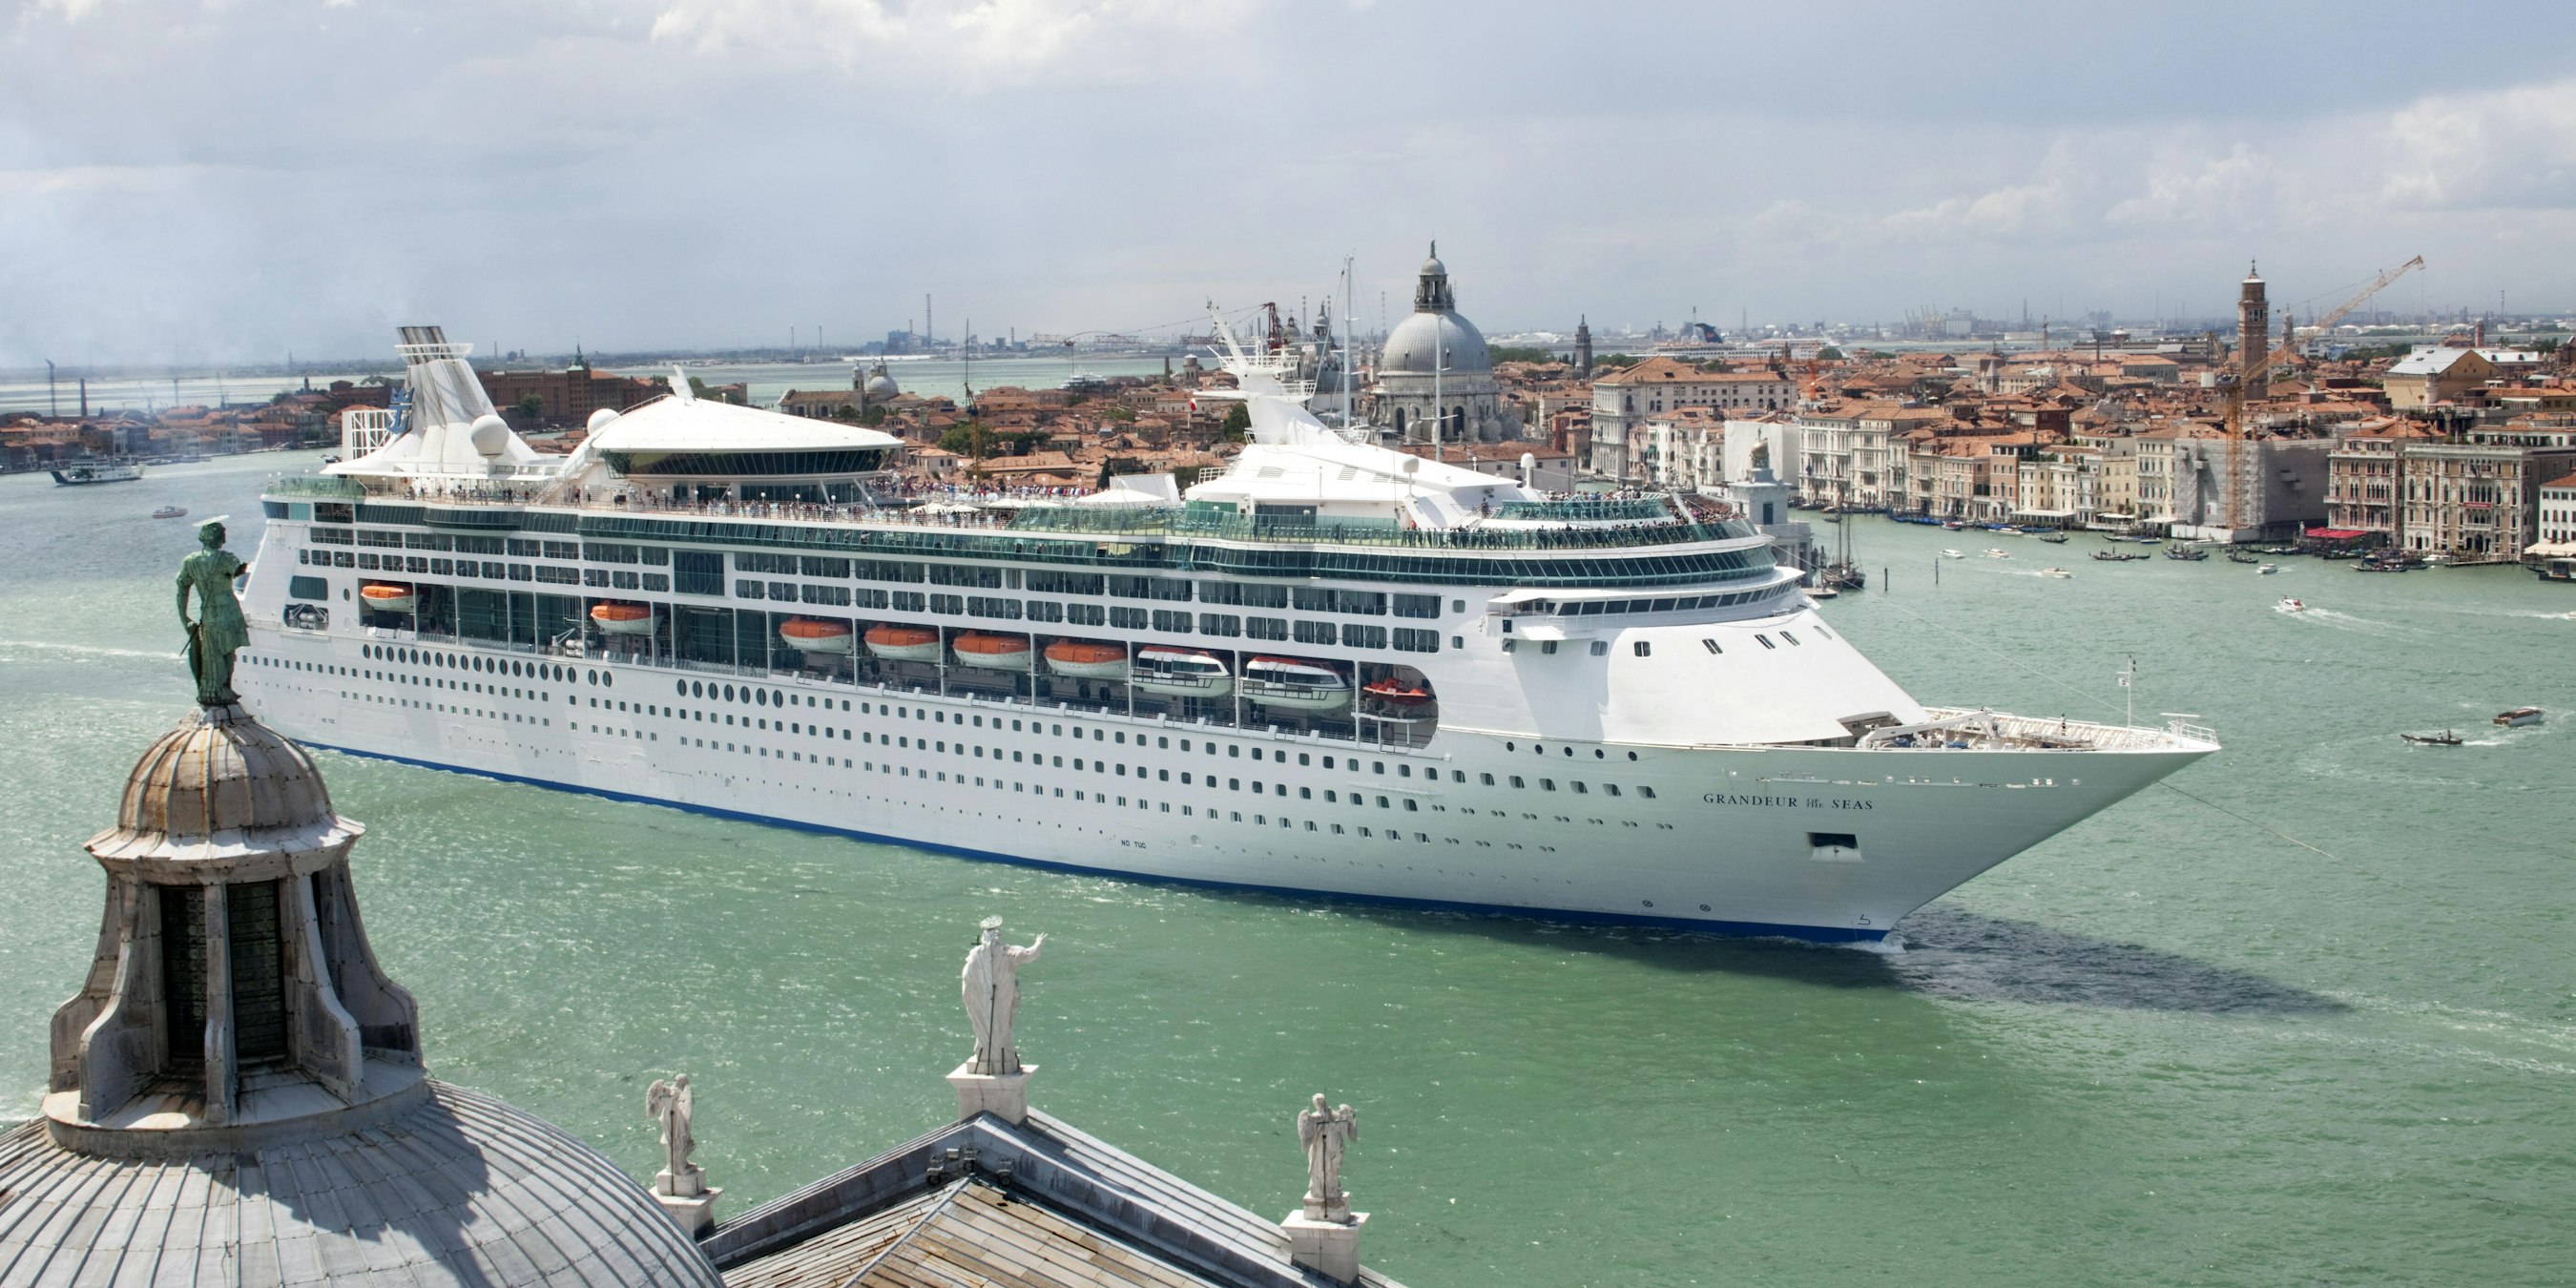 Grandeur of the Seas Cruise Ship Set to Leave Royal Caribbean Fleet in 2021